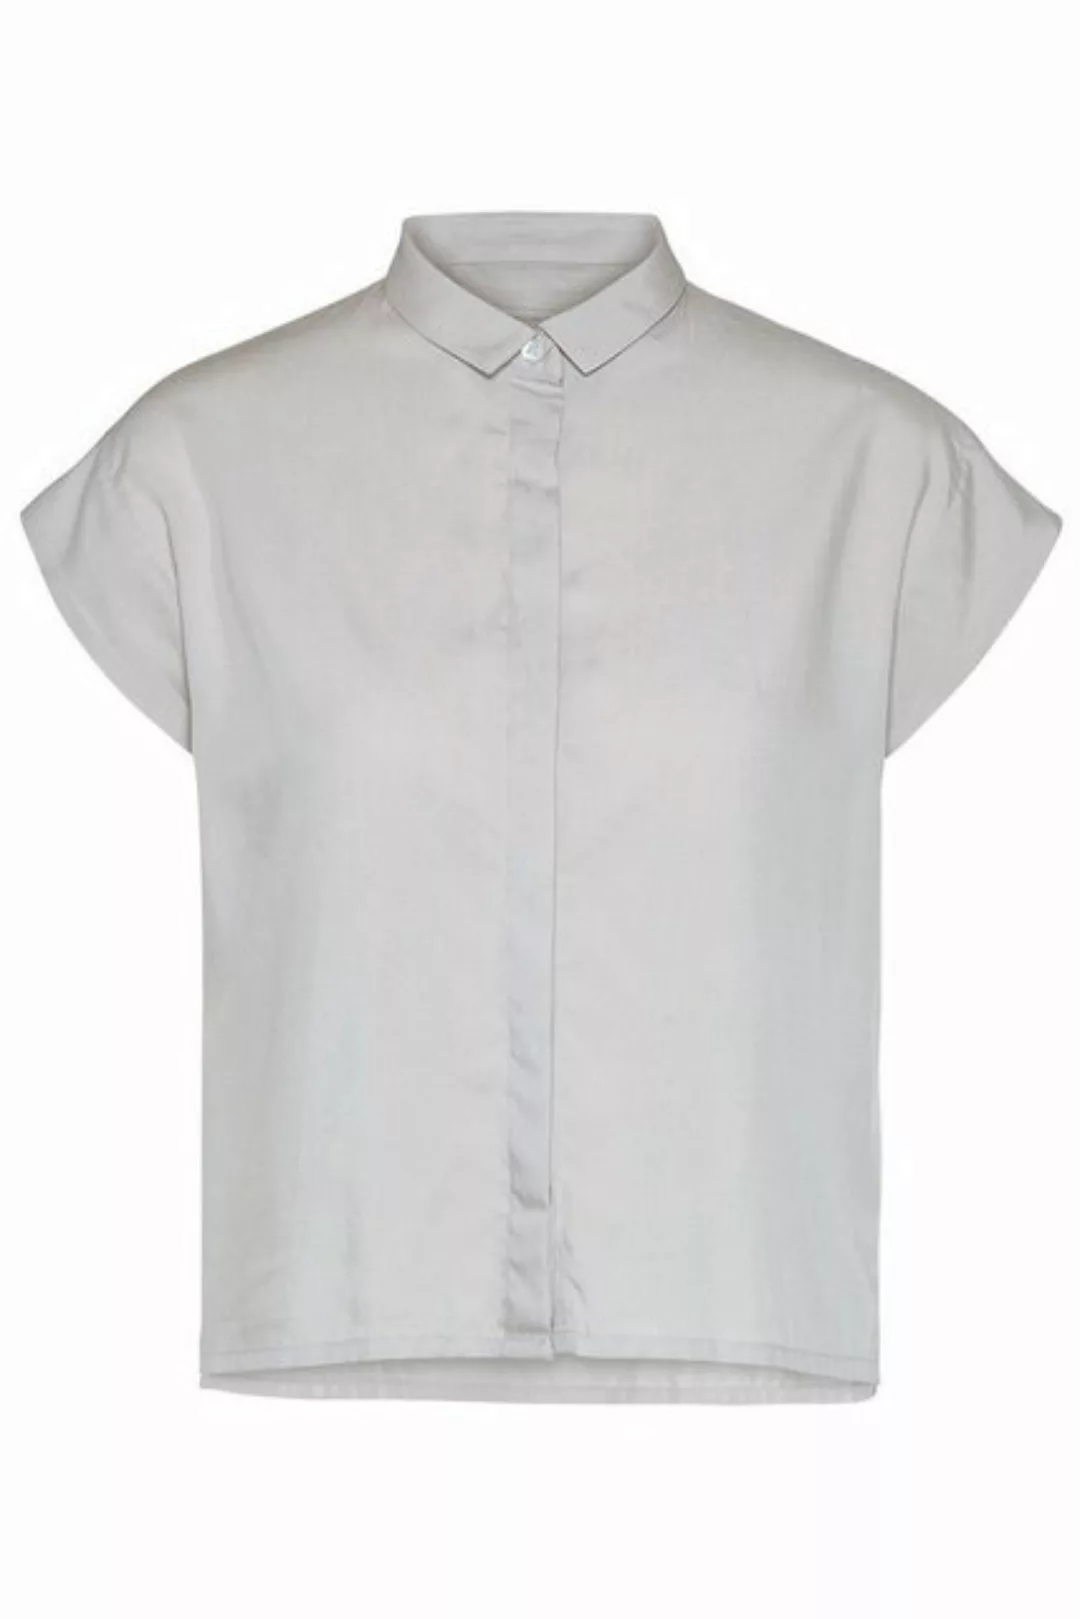 wunderwerk Kurzarmbluse TENCEL square blouse 1/2 günstig online kaufen